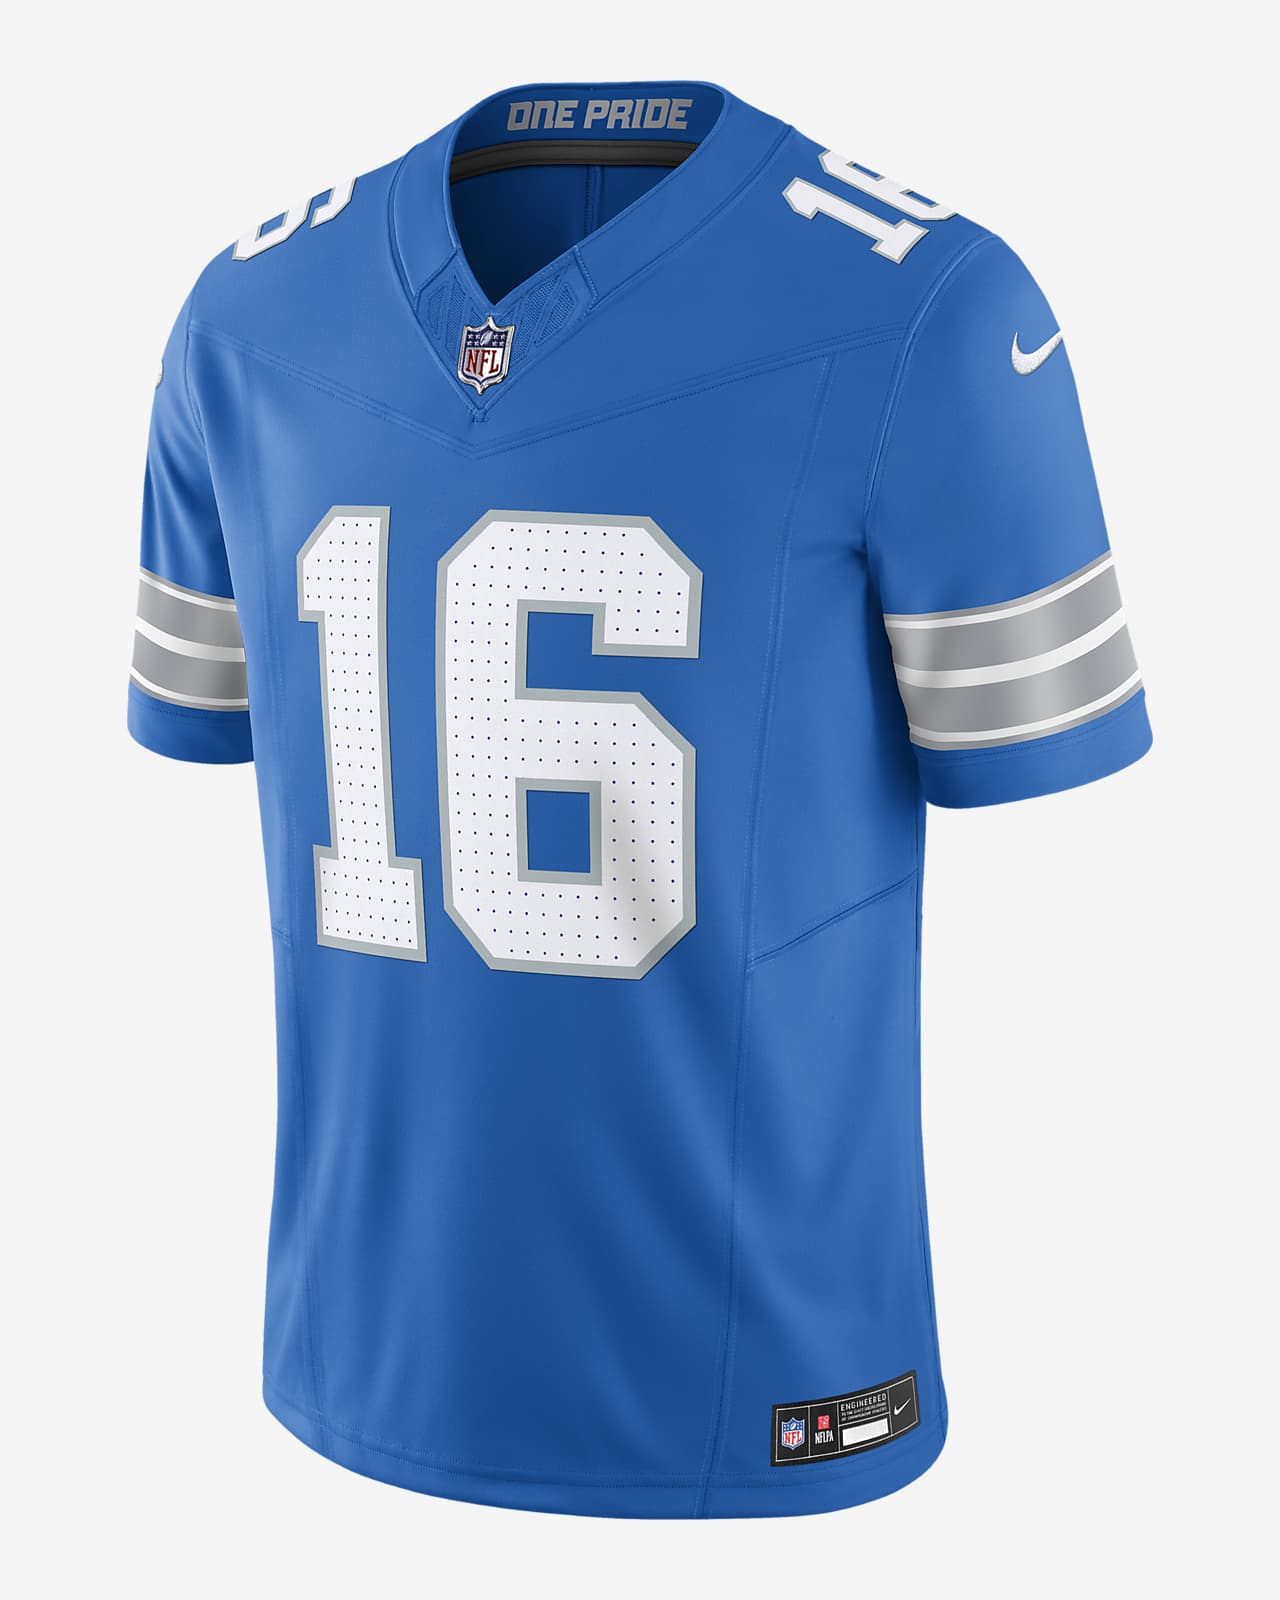 Jersey de fútbol americano Nike Dri-FIT de la NFL Limited para hombre Jared Goff Detroit Lions